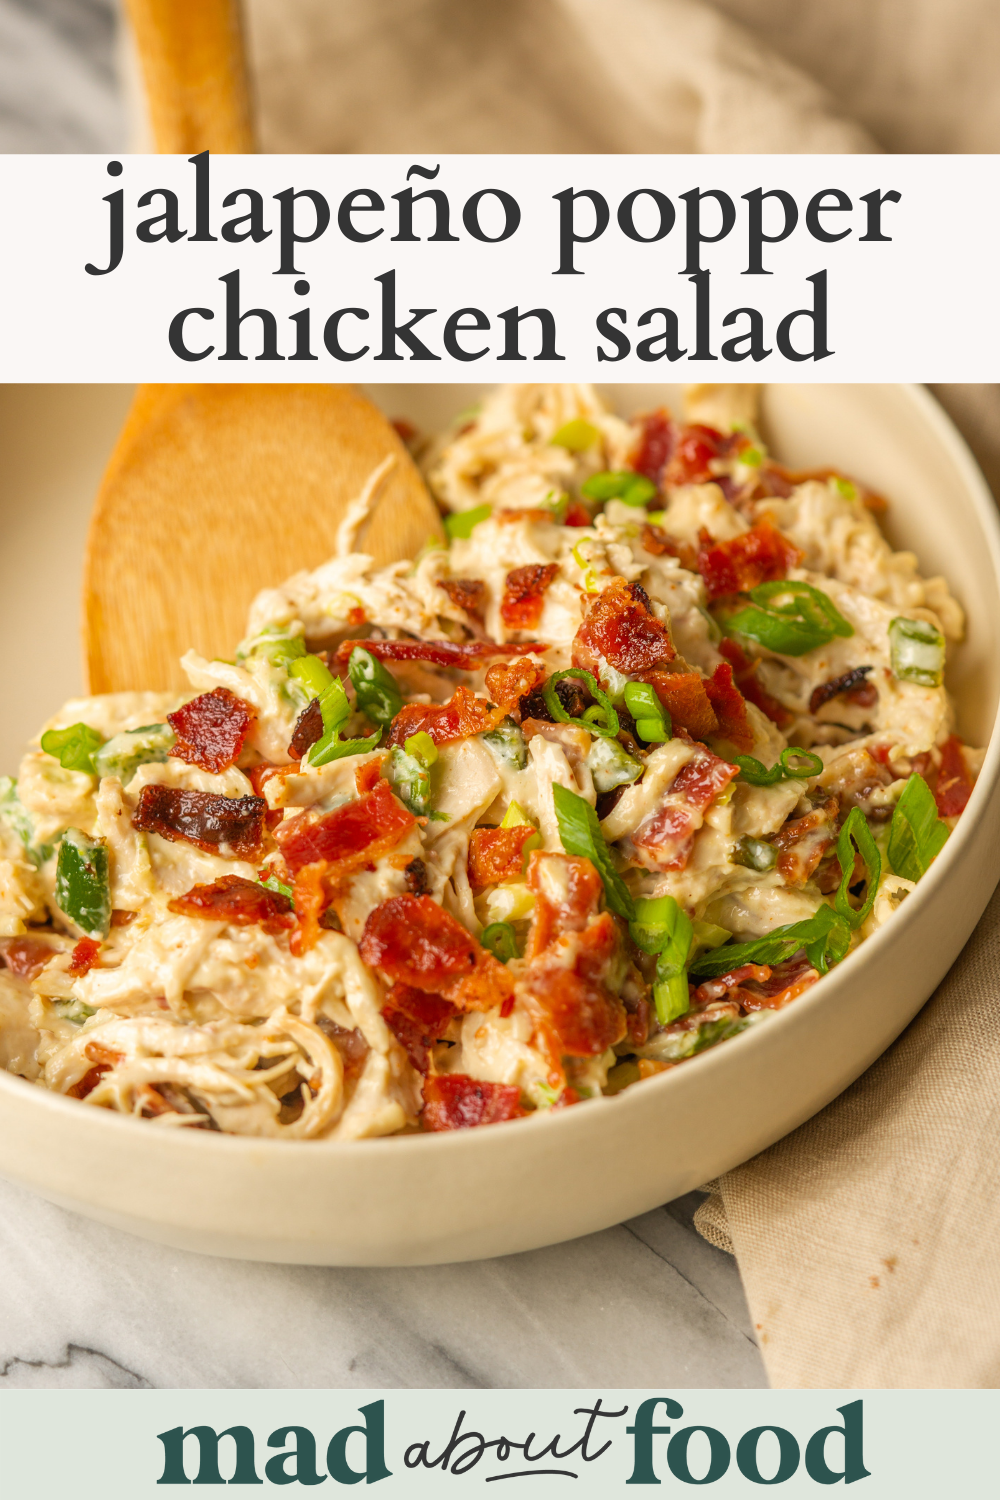 Image for pinning Jalapeño Popper Chicken Salad recipe on Pinterest